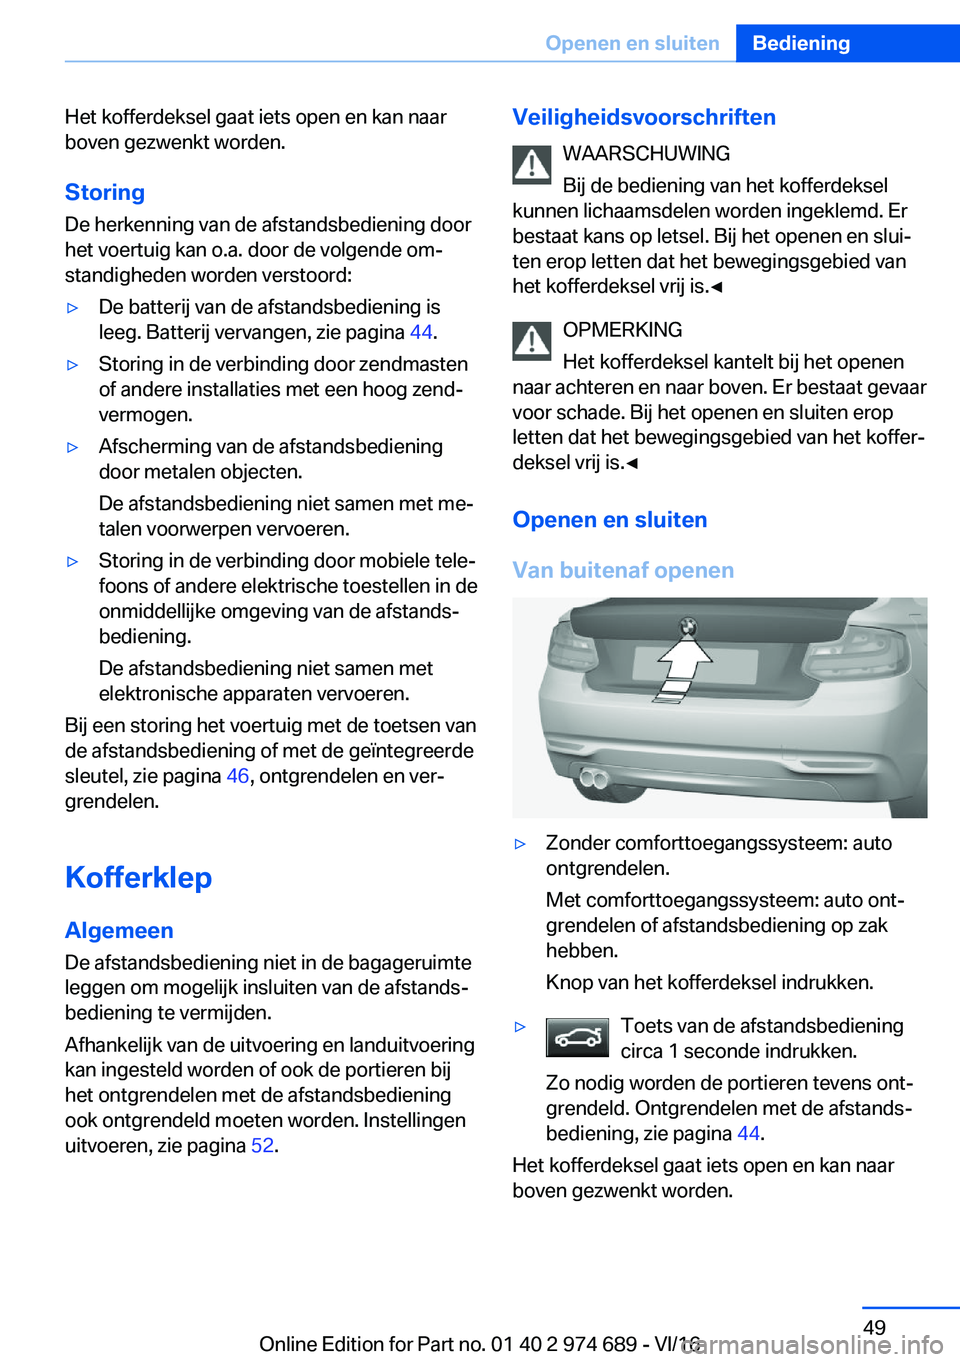 BMW M2 2017  Instructieboekjes (in Dutch) �H�e�t� �k�o�f�f�e�r�d�e�k�s�e�l� �g�a�a�t� �i�e�t�s� �o�p�e�n� �e�n� �k�a�n� �n�a�a�r�b�o�v�e�n� �g�e�z�w�e�n�k�t� �w�o�r�d�e�n�.
�S�t�o�r�i�n�g �D�e� �h�e�r�k�e�n�n�i�n�g� �v�a�n� �d�e� �a�f�s�t�a�n